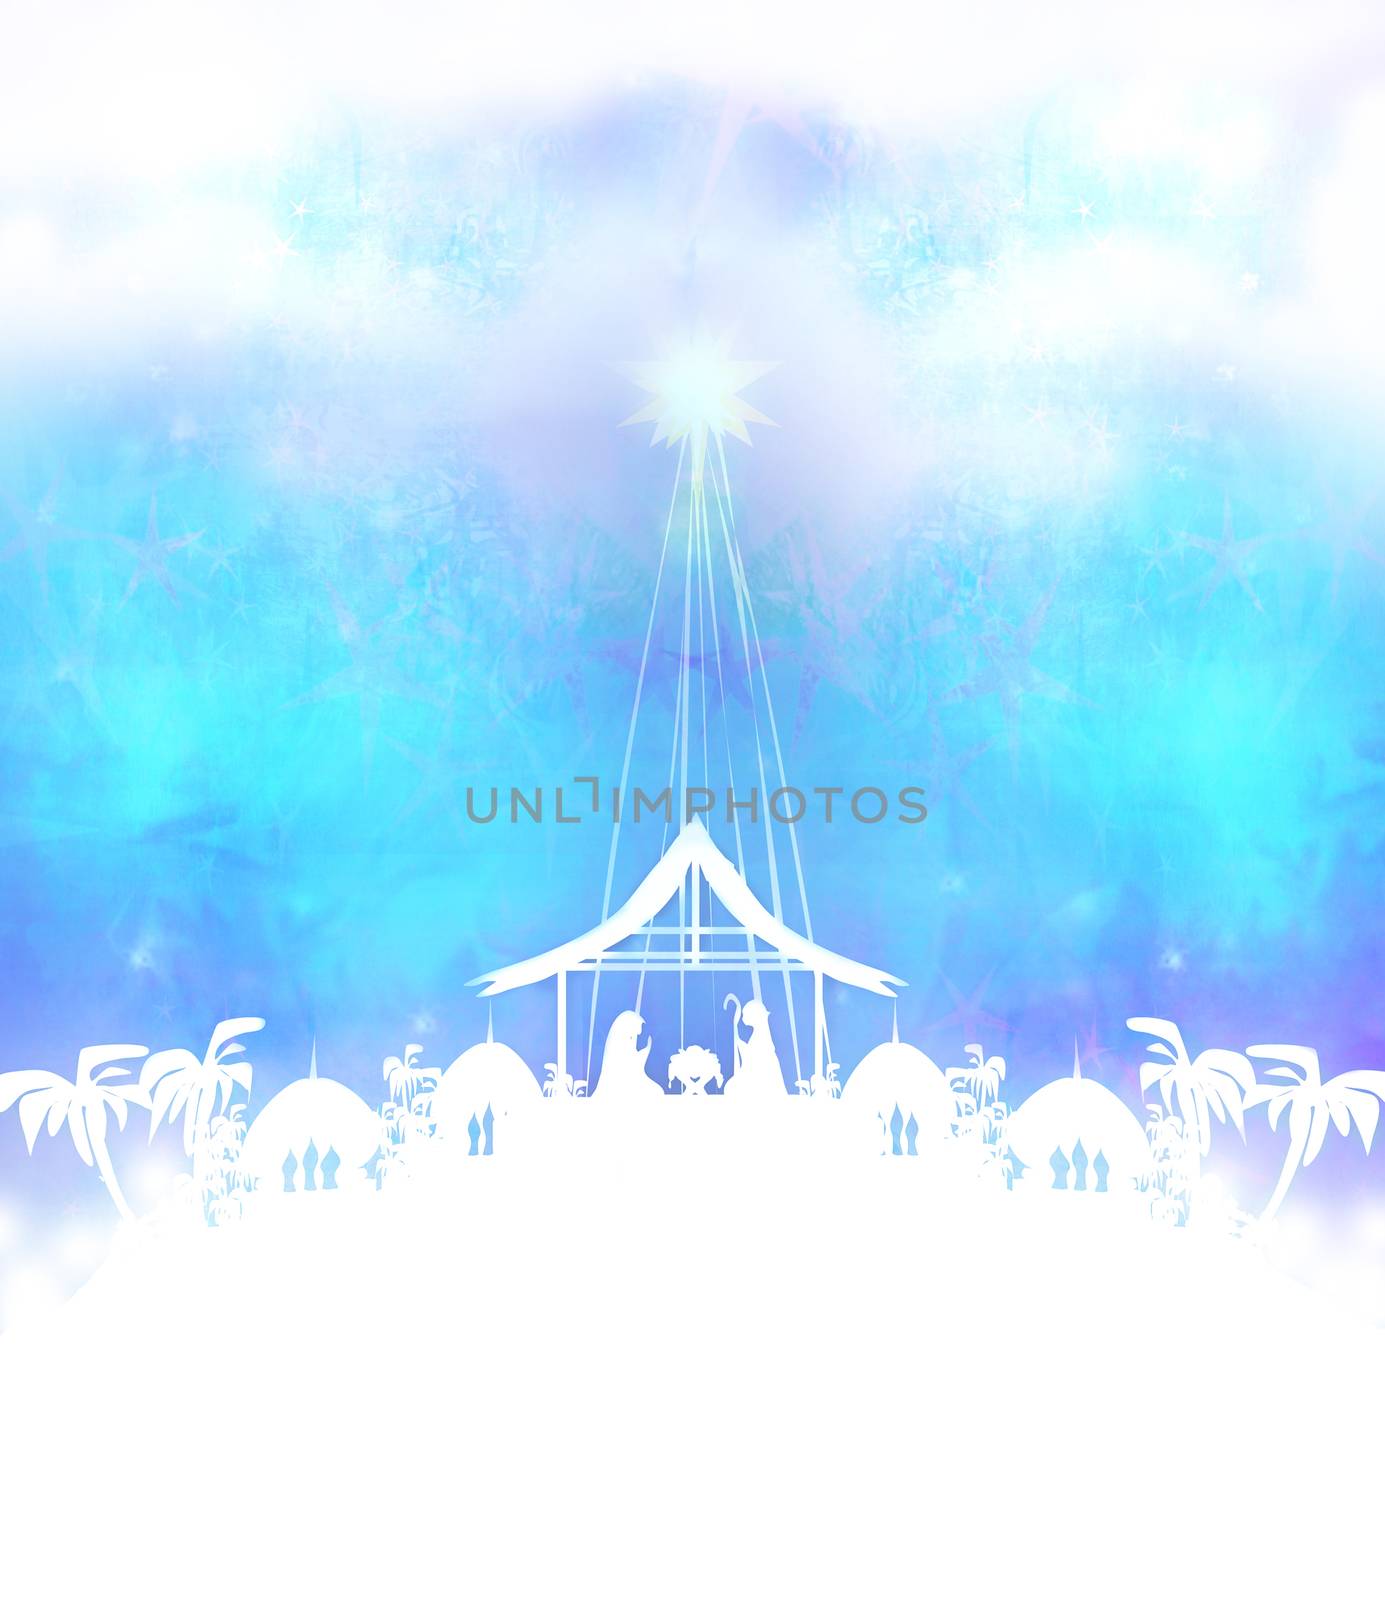 Birth of Jesus in Bethlehem, Christmas card